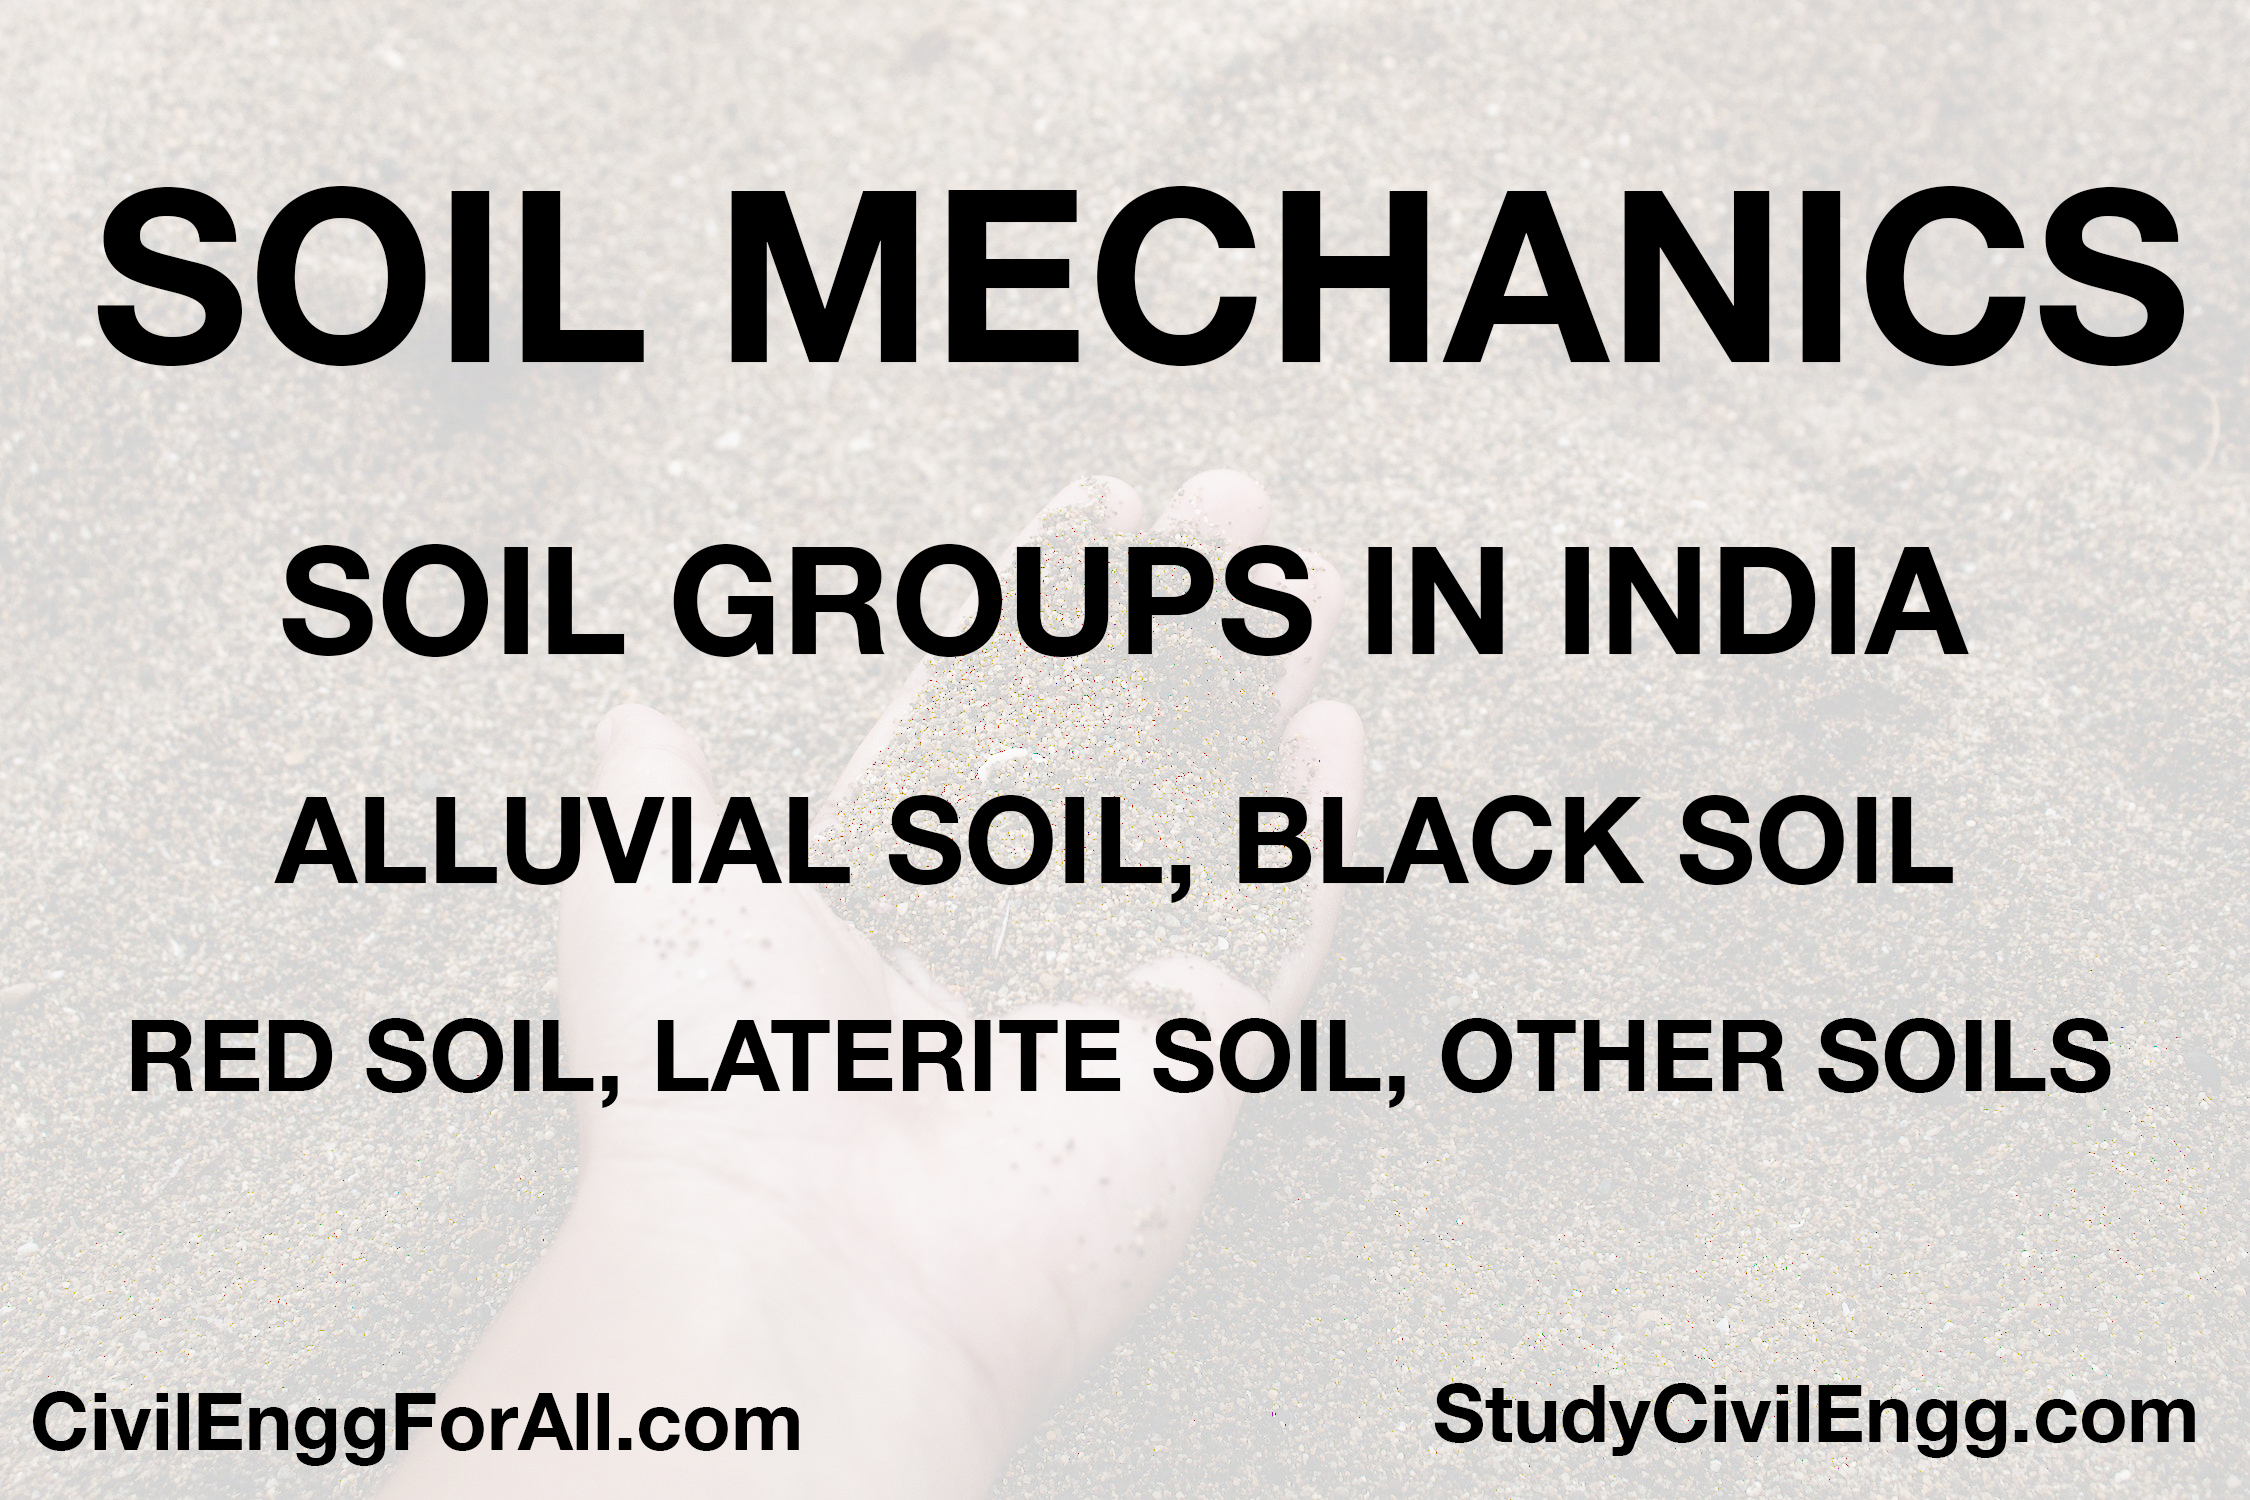 Soil Groups in India - Soil Mechanics - StudyCivilEngg.com